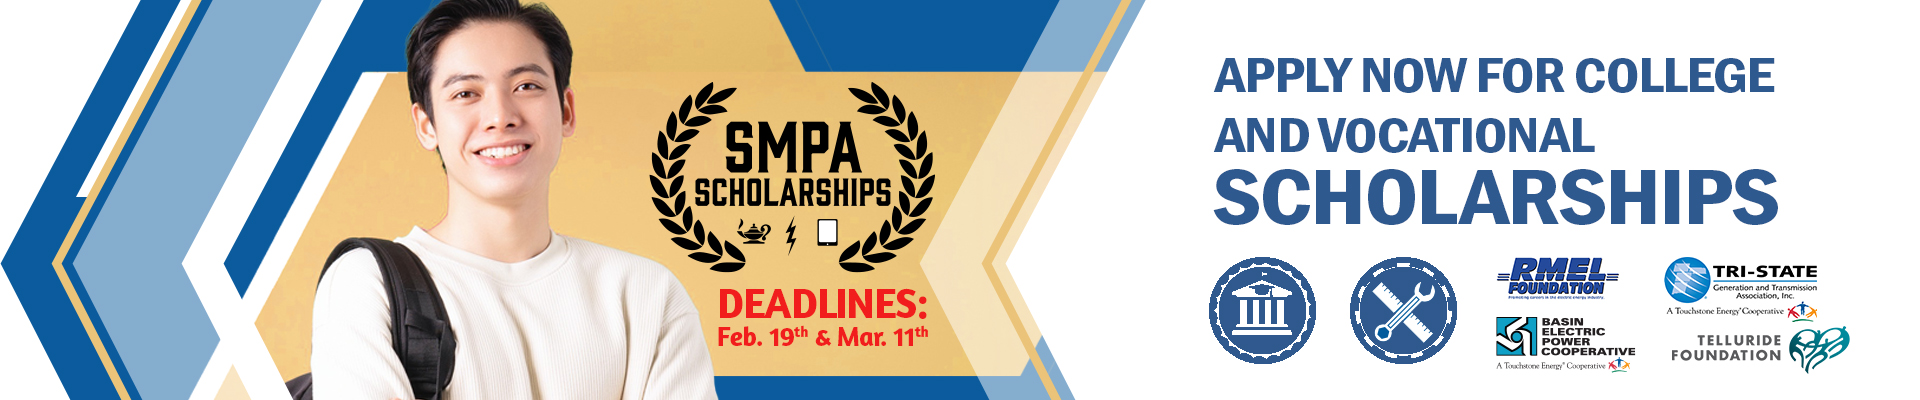 SMPA Scholarships - Deadlines: Feb 19, Mar 11